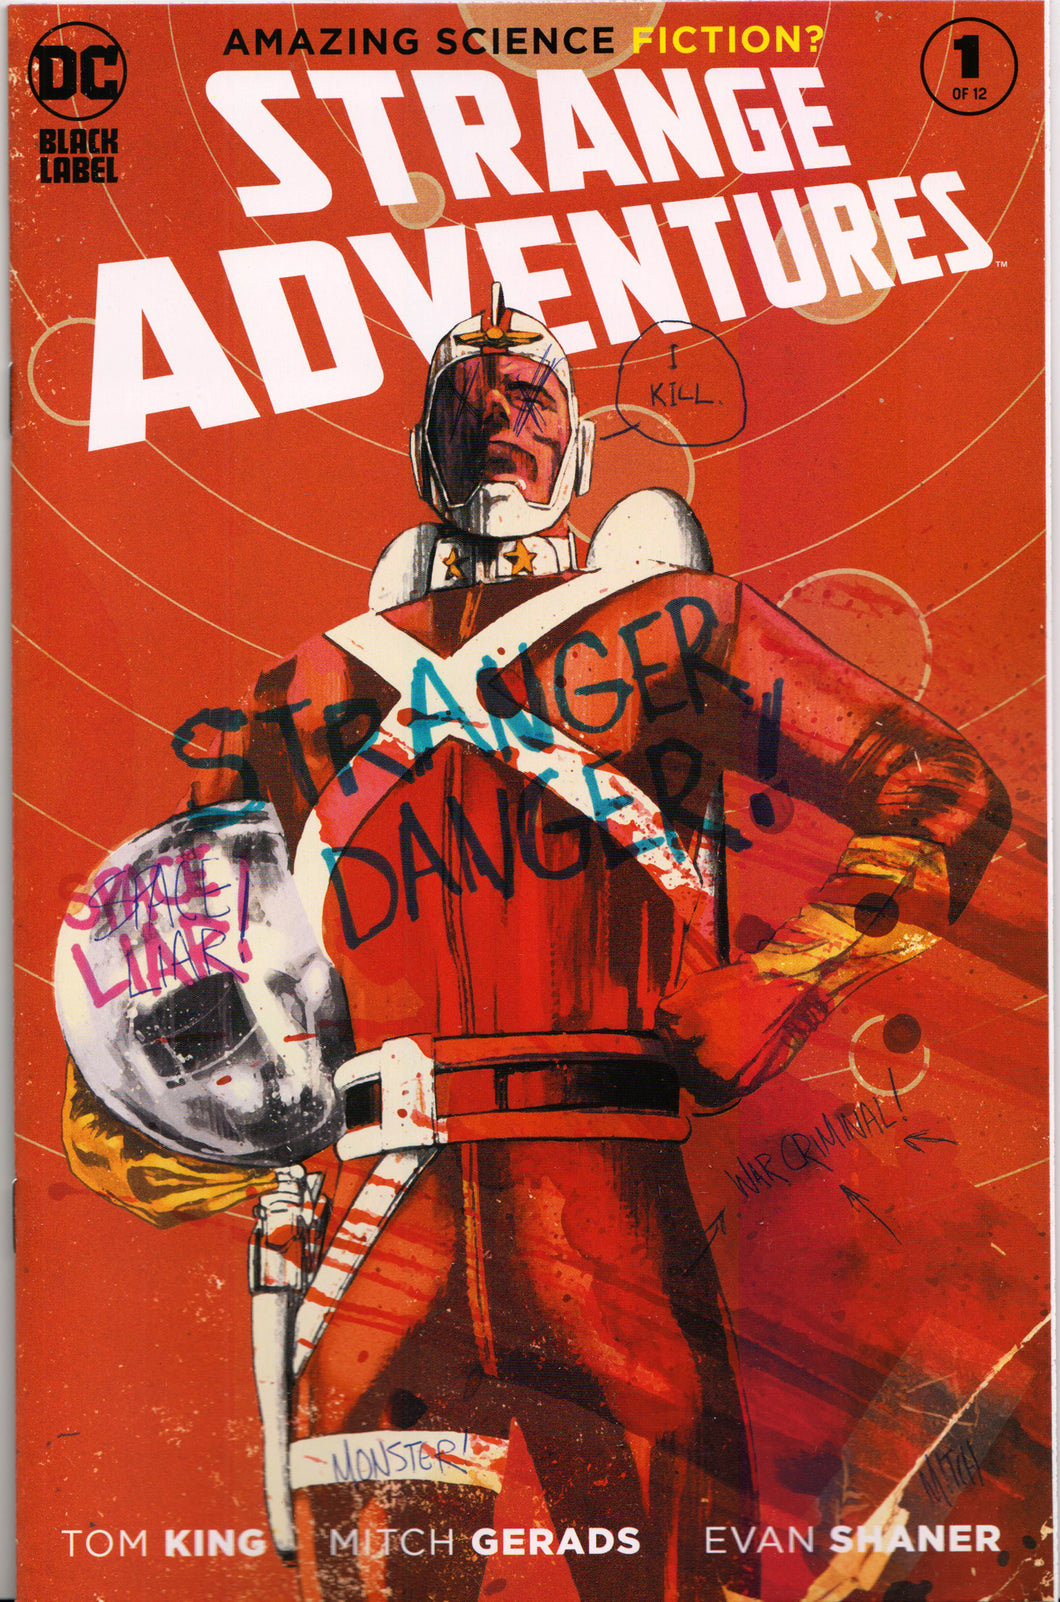 STRANGE ADVENTURES #1 (2ND PRINT COVER B) Comic Book ~ Tom King & Mitch Gerads